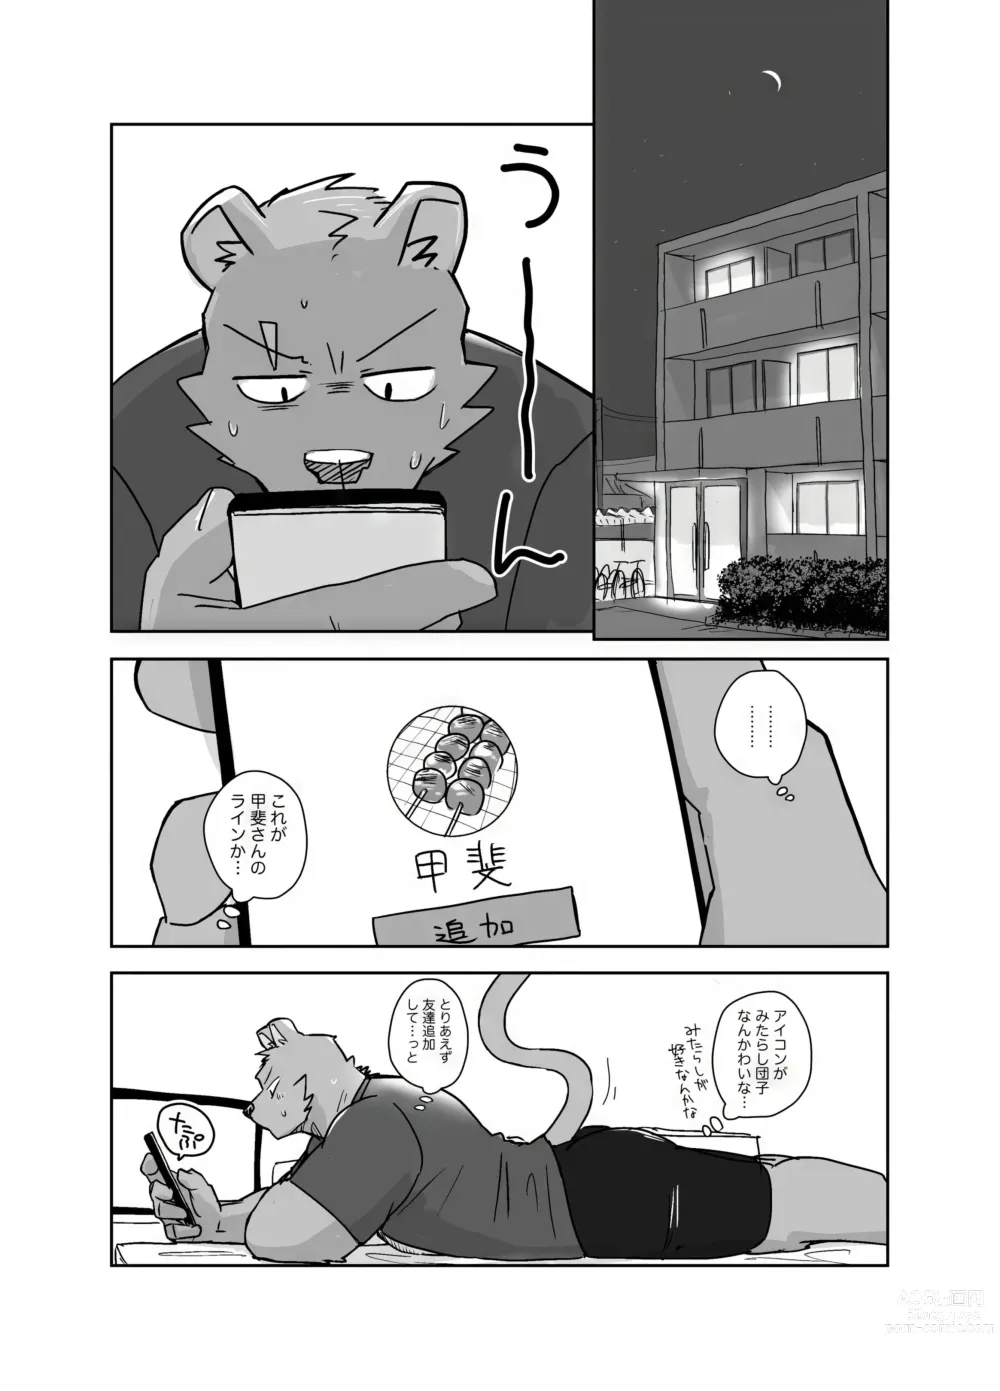 Page 1 of manga 【おまけ漫画】その日の夜